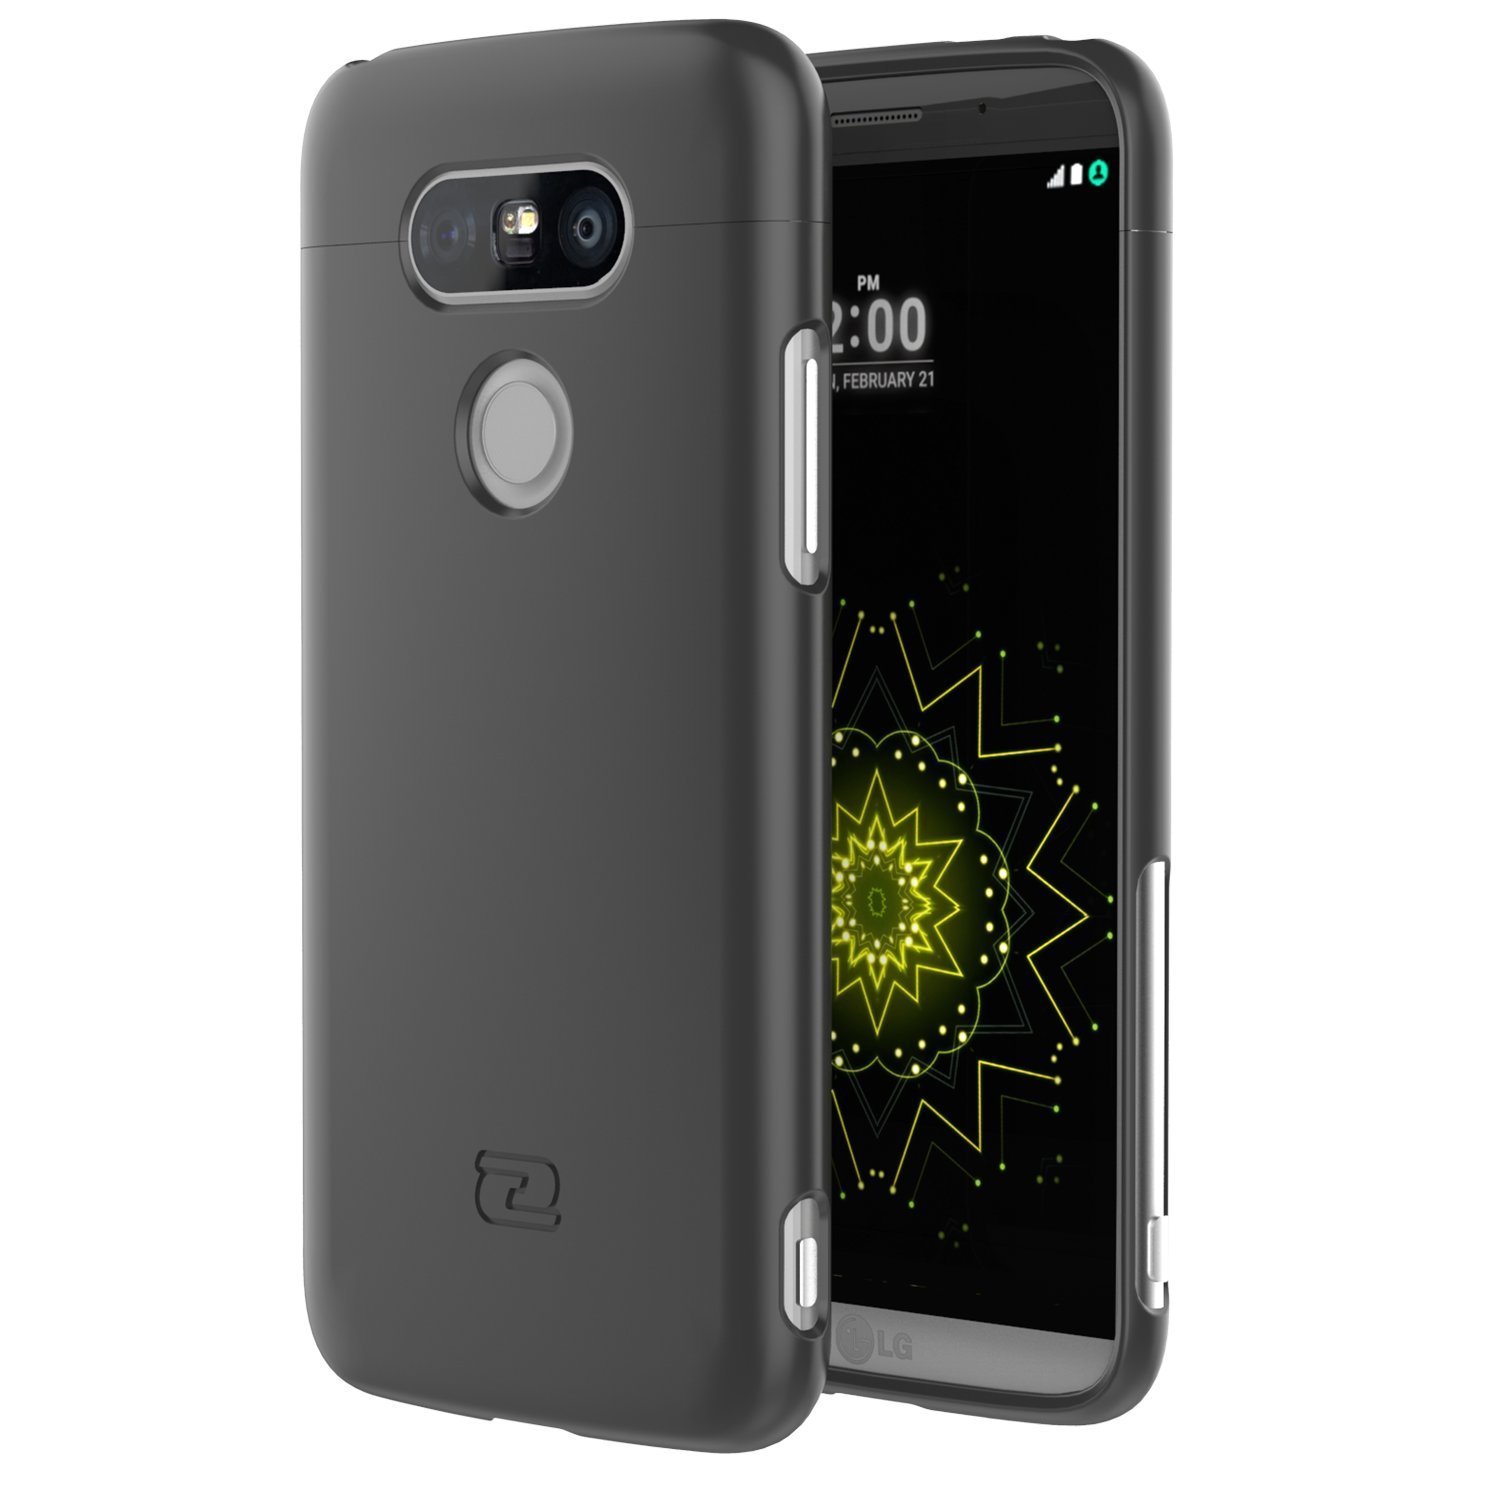 LG G5 Ultra-thin SlimSHIELD Hybrid Shell Case by Encased